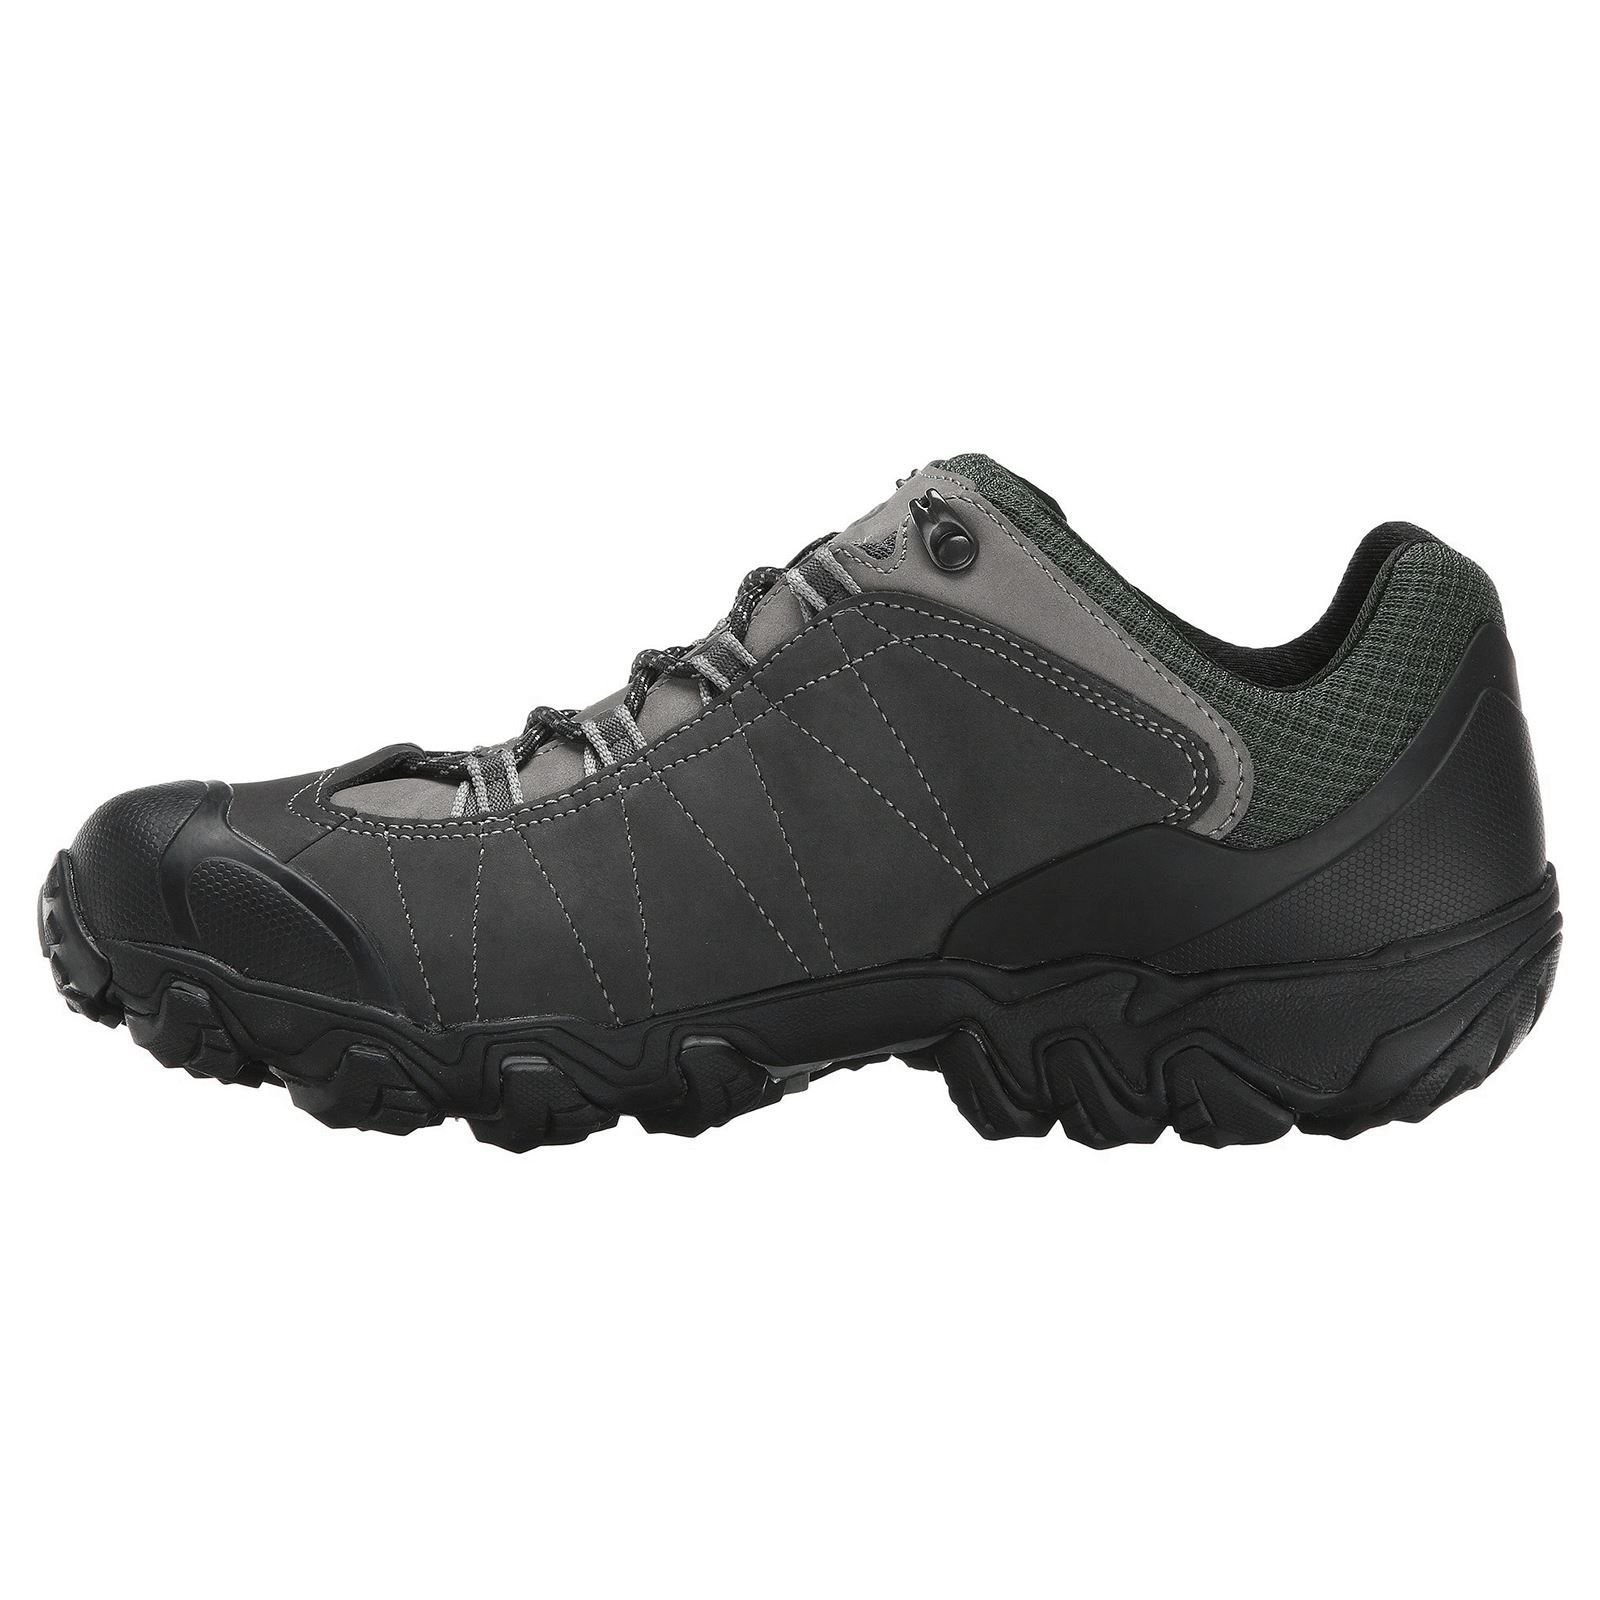 Oboz Men's Bridger Low B-Dry Waterproof Hiking Shoe